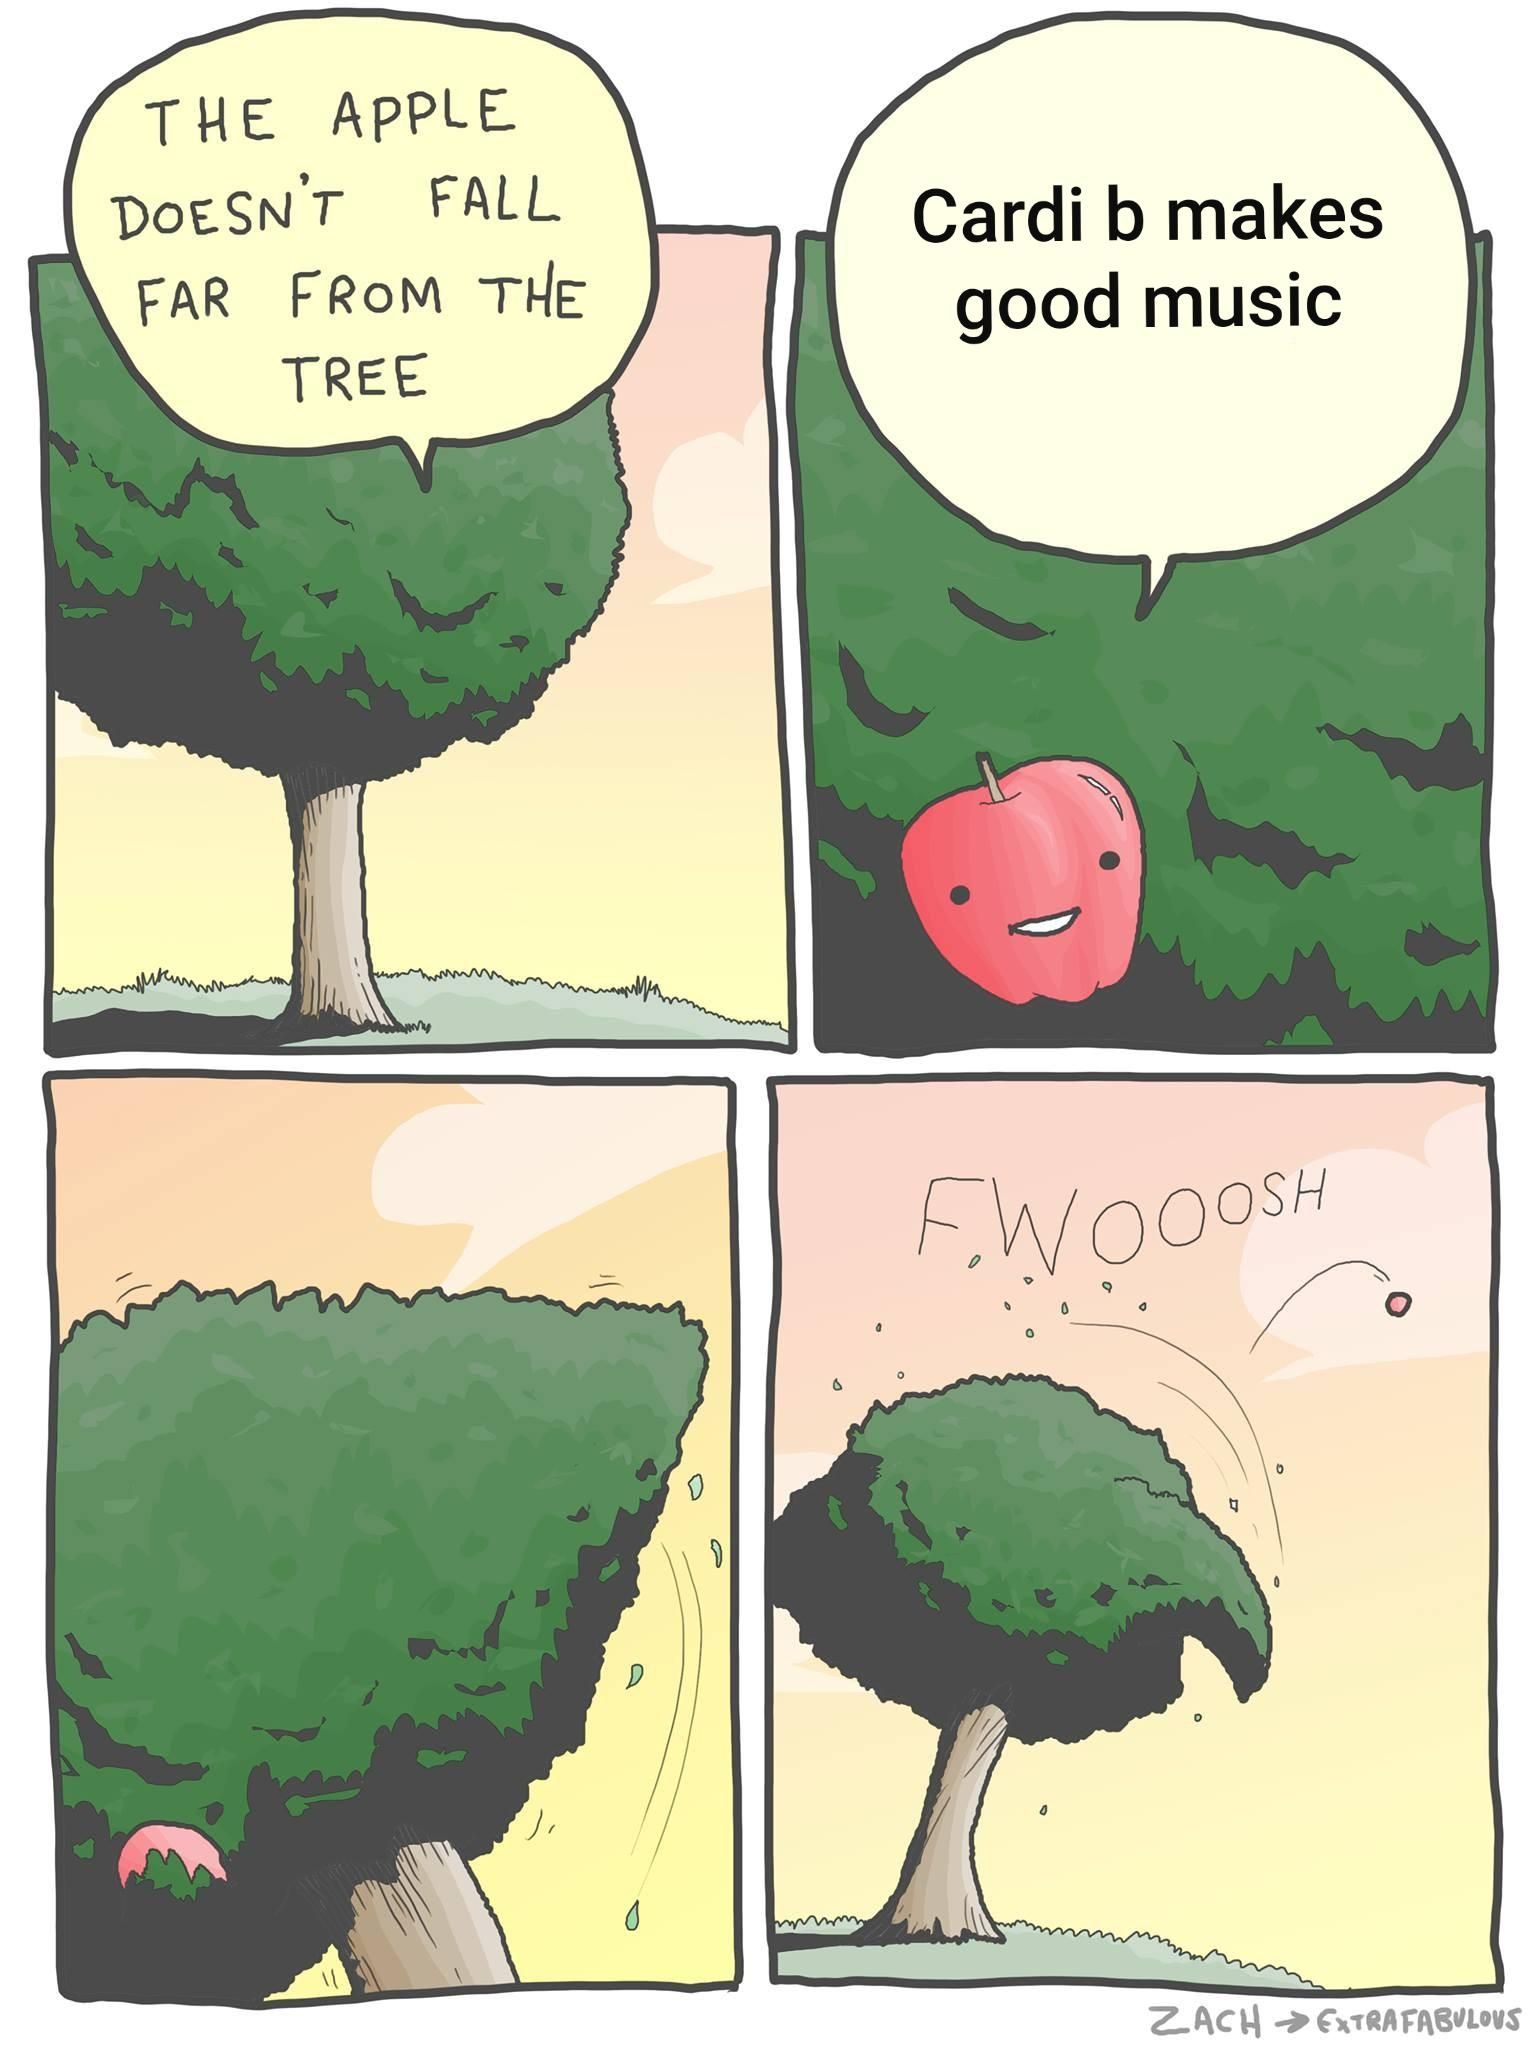 Tree meme